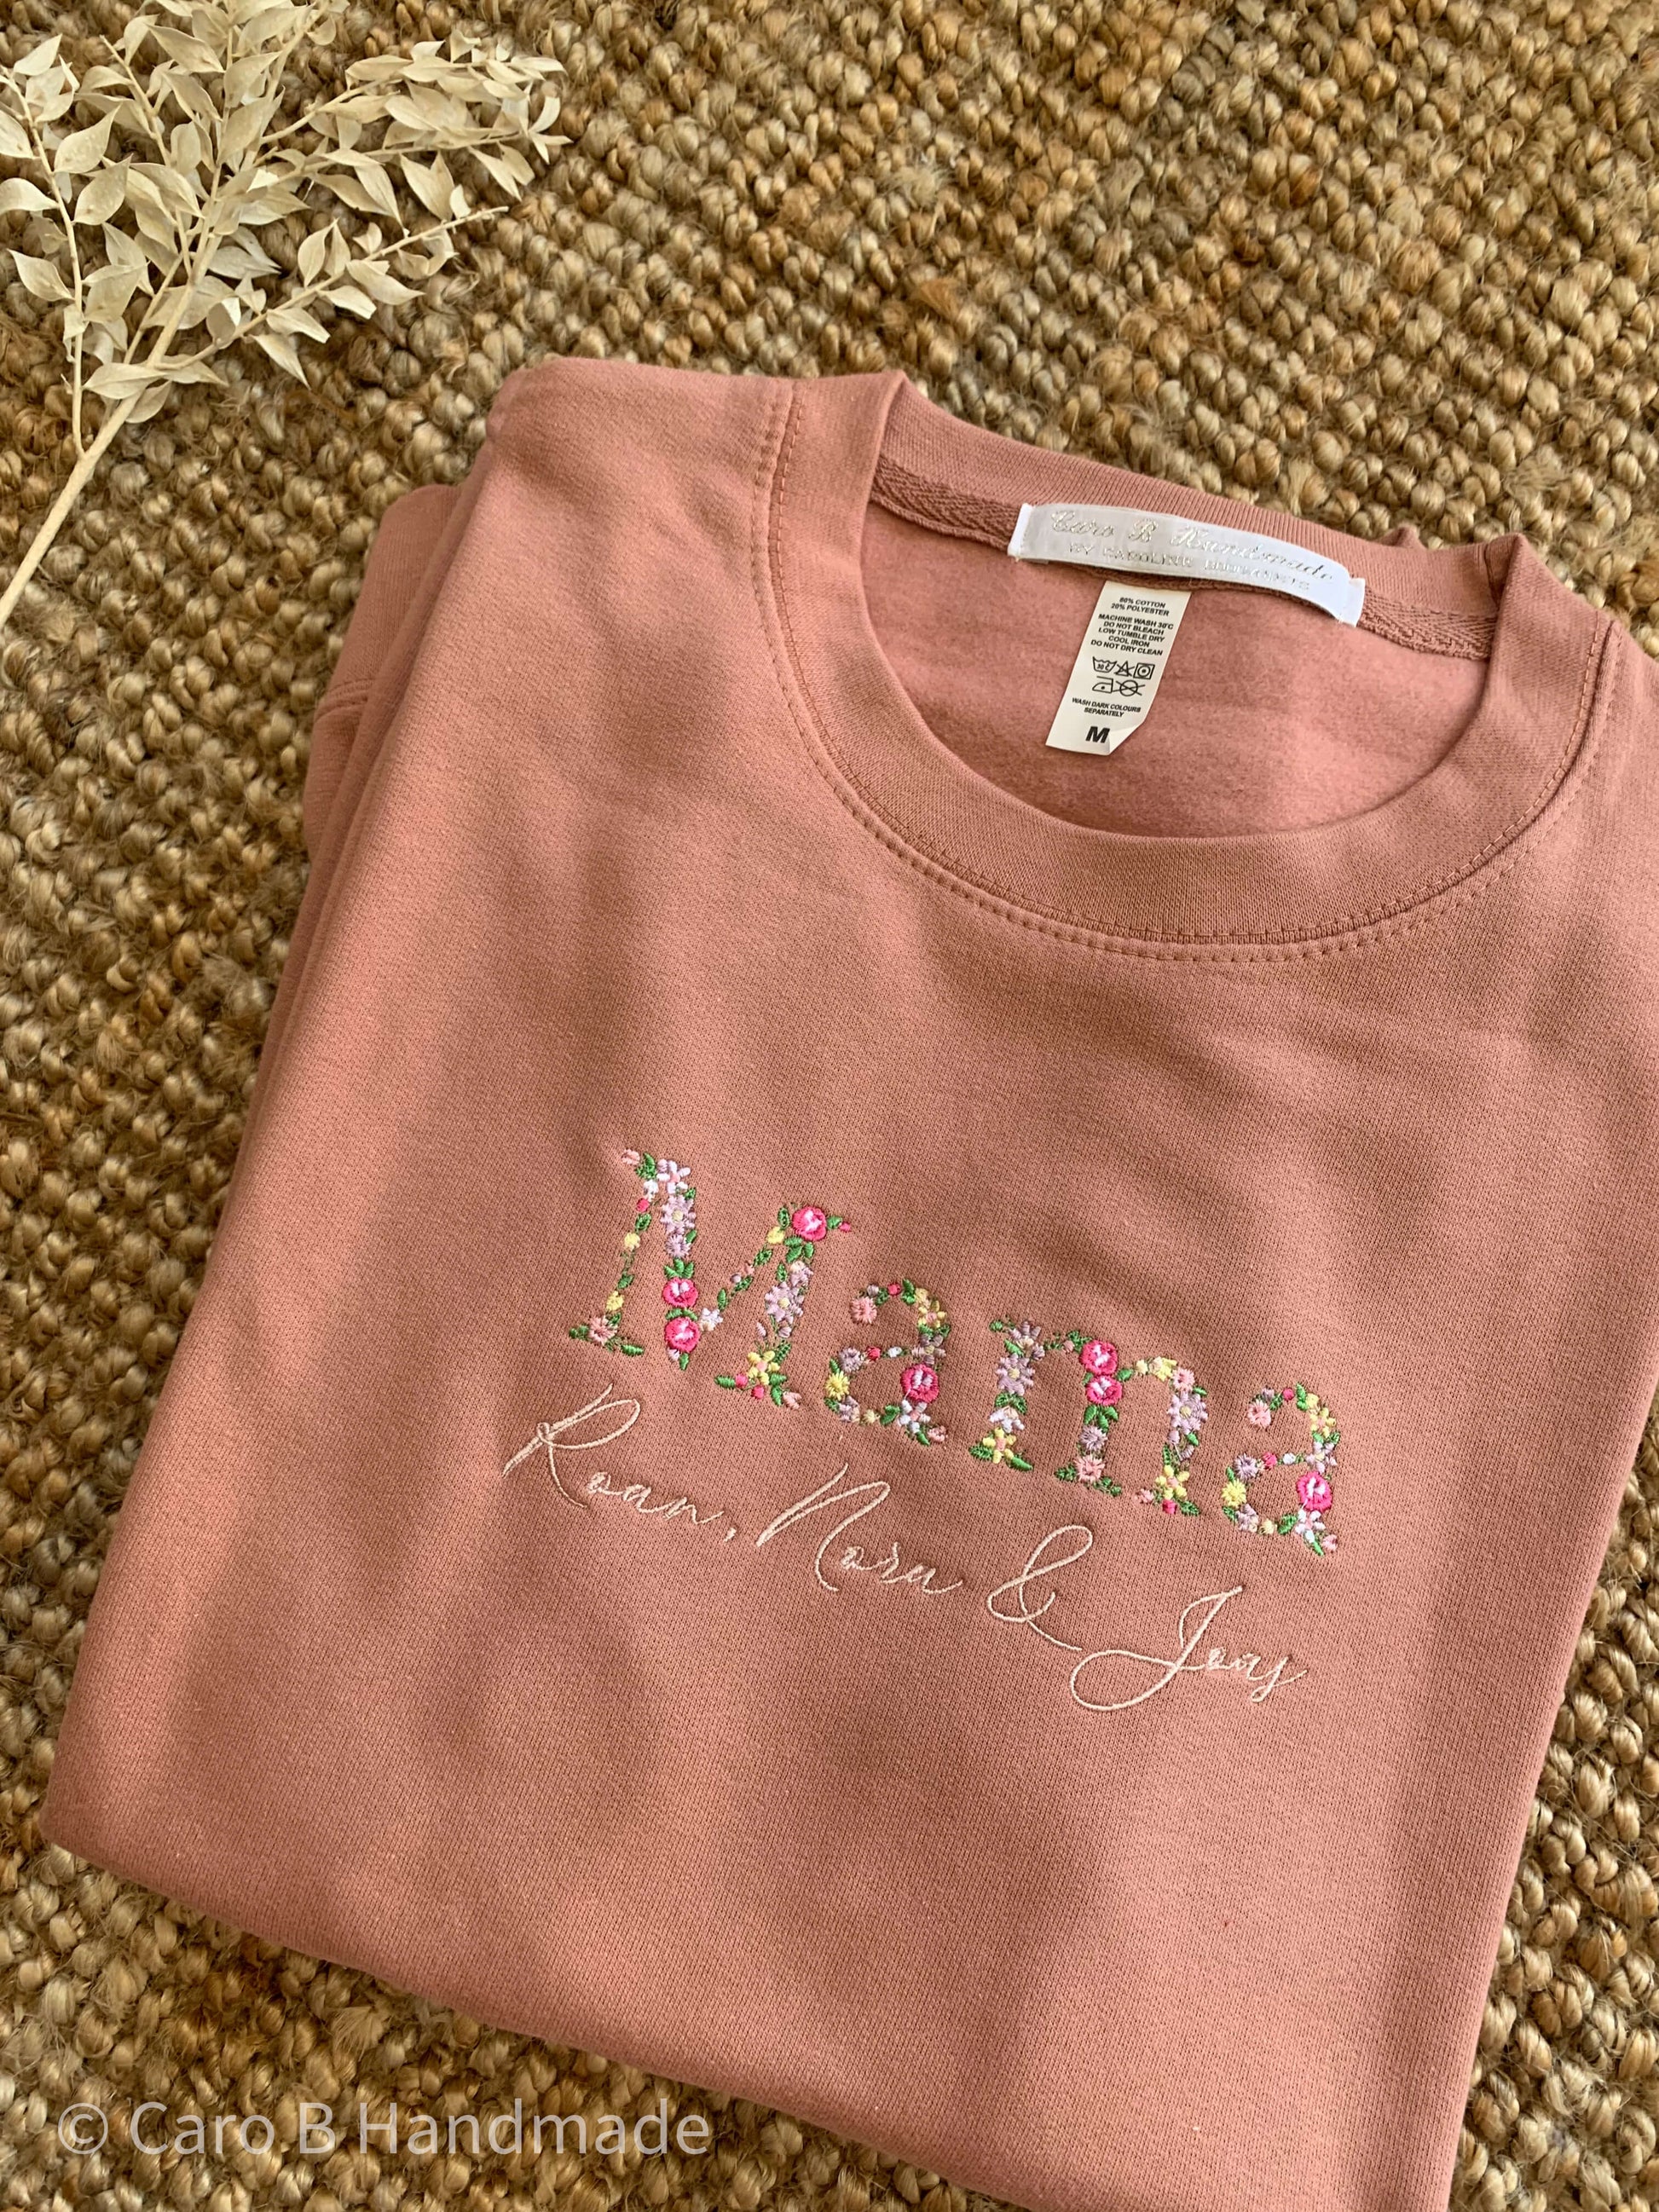 Mama sweater gepersonaliseerd met borduur - Geborduurd met naam - Borduur - Unieke trui voor je meter of metie - Verjaardag Meter - Babywinkel - Caro B Handmade - Merchtem